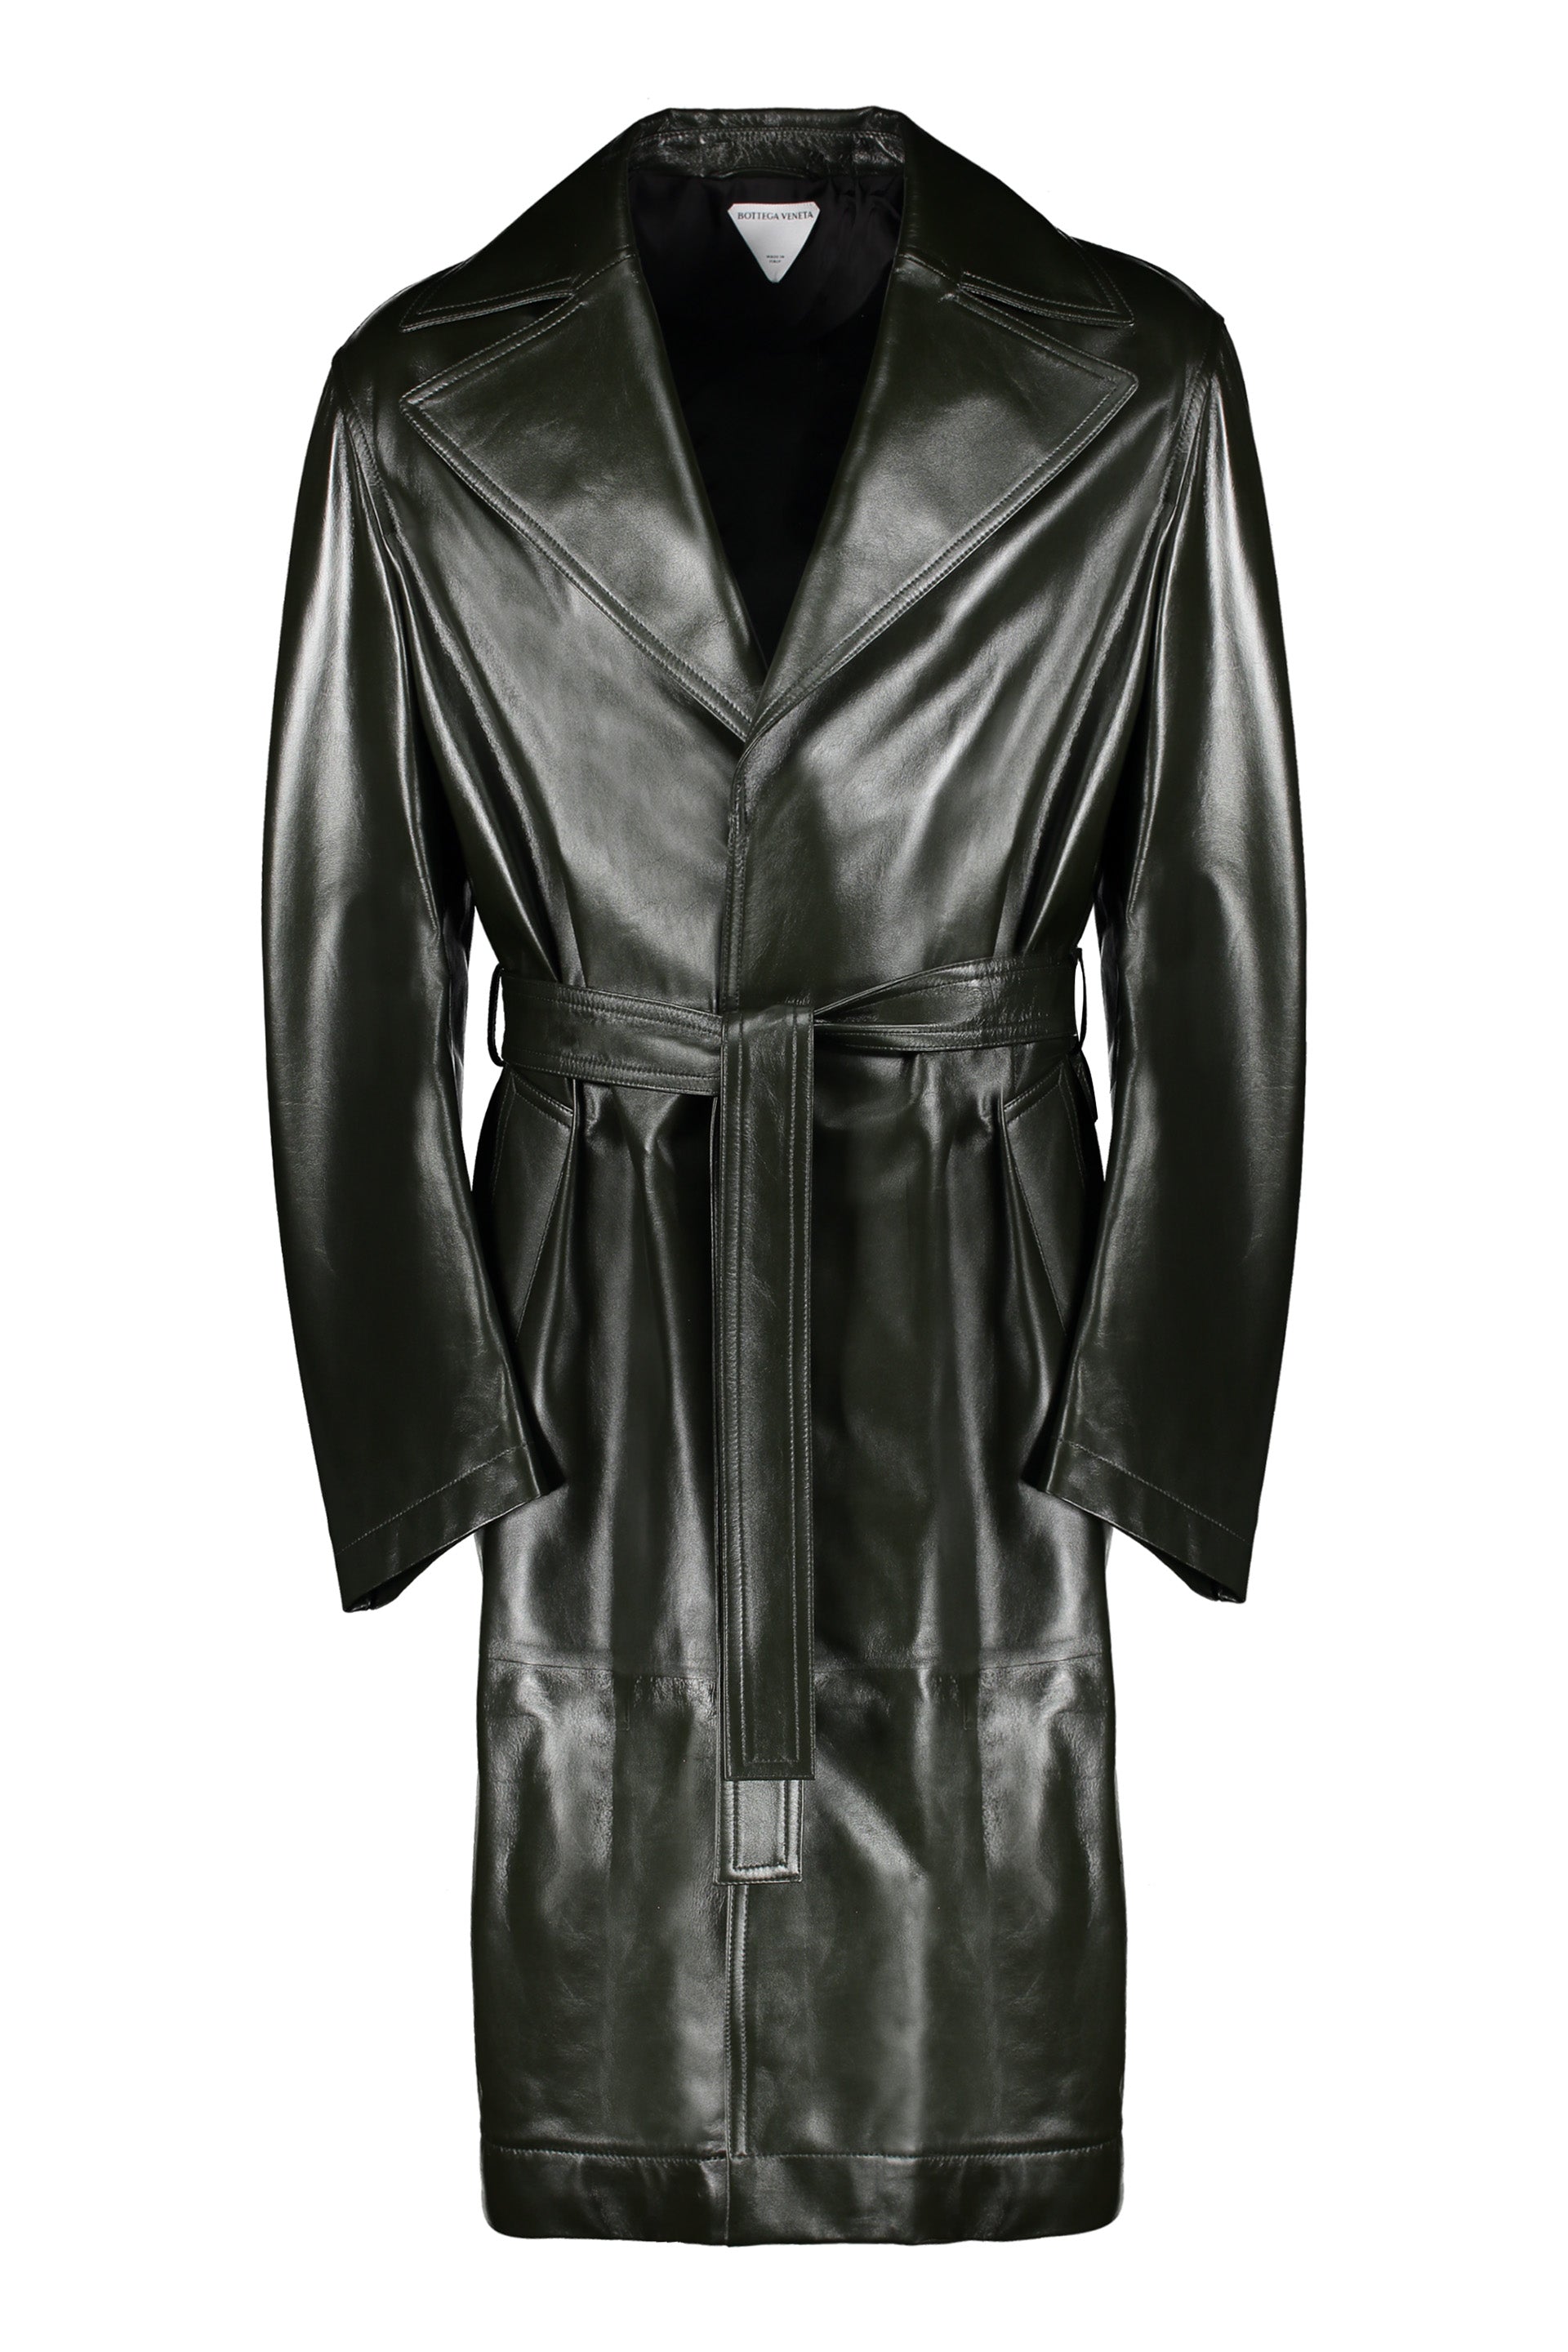 Lambskin jacket-Bottega Veneta-OUTLET-SALE-50-ARCHIVIST